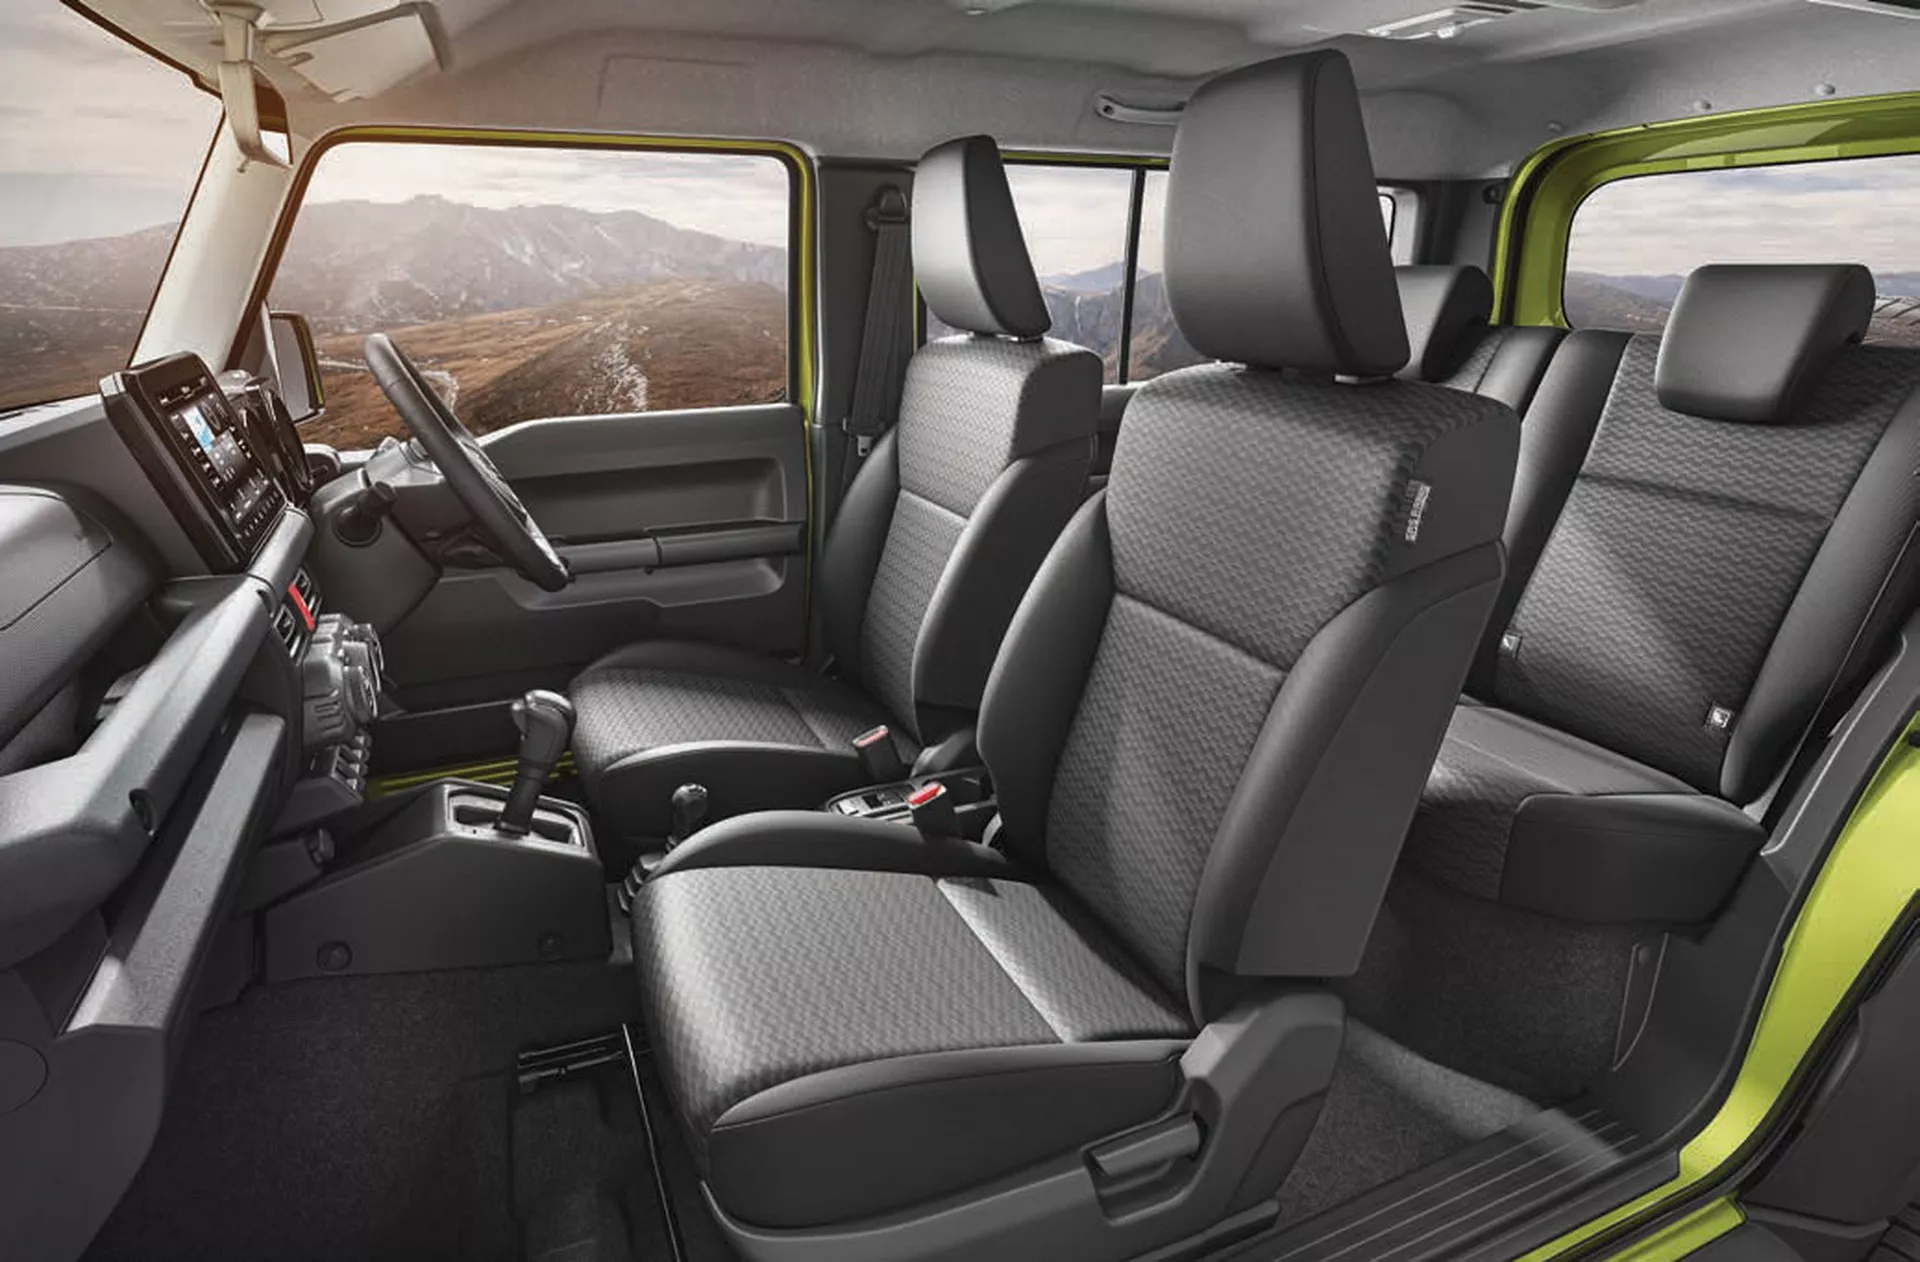 Suzuki Jimny Interior Layout & Technology | Top Gear